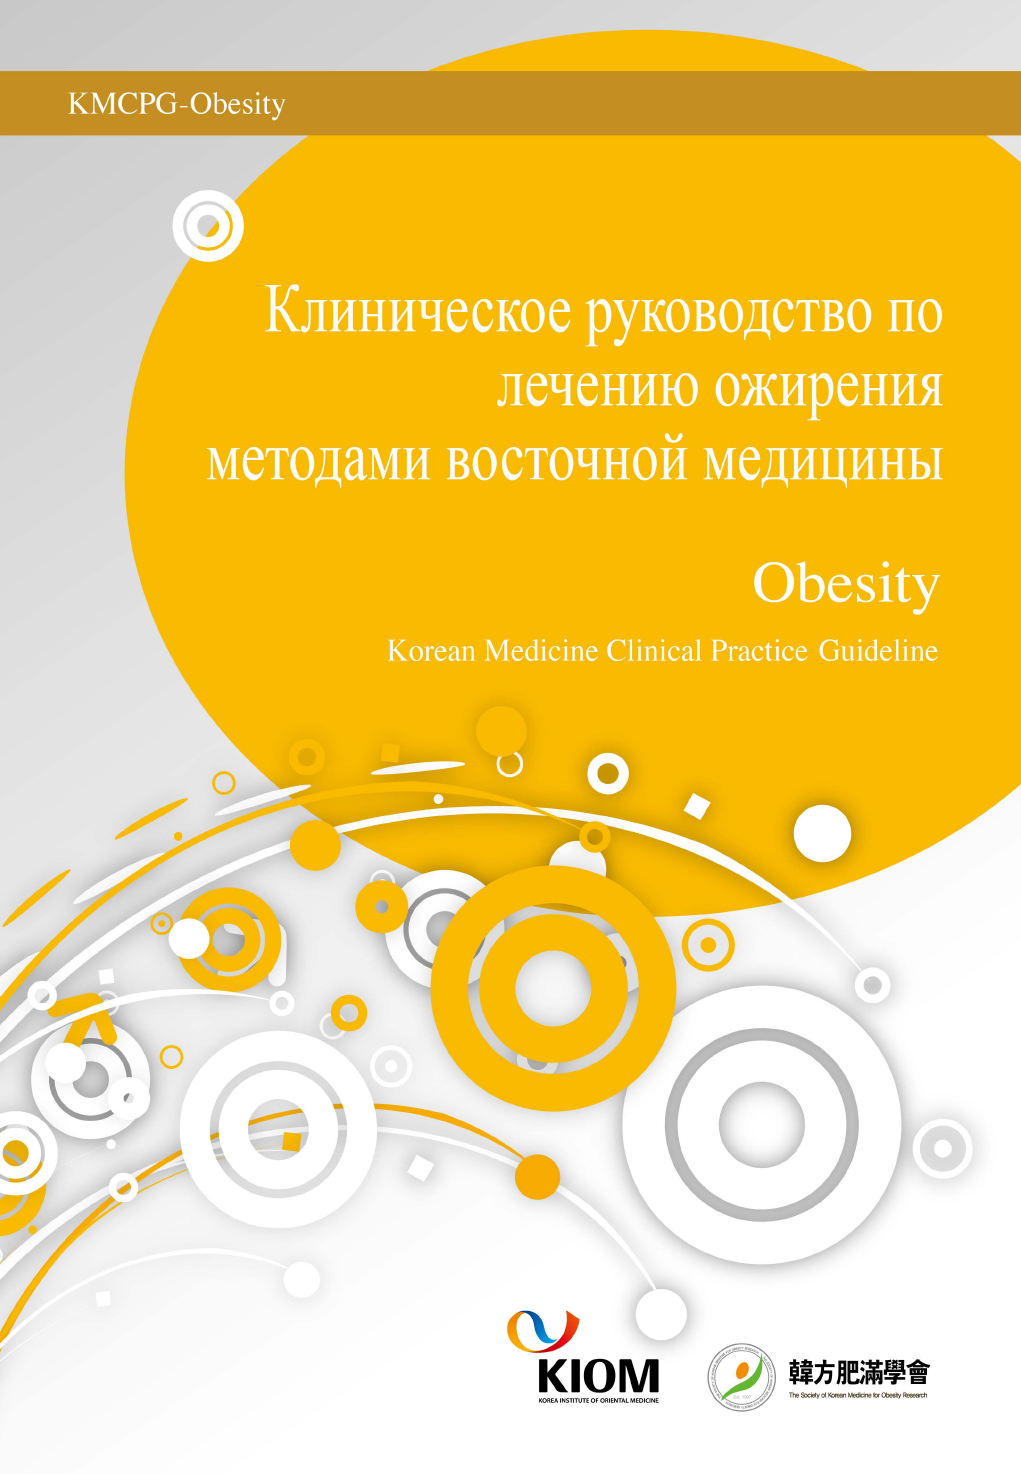 2. Introduction to Korean Medicine - Russian Version